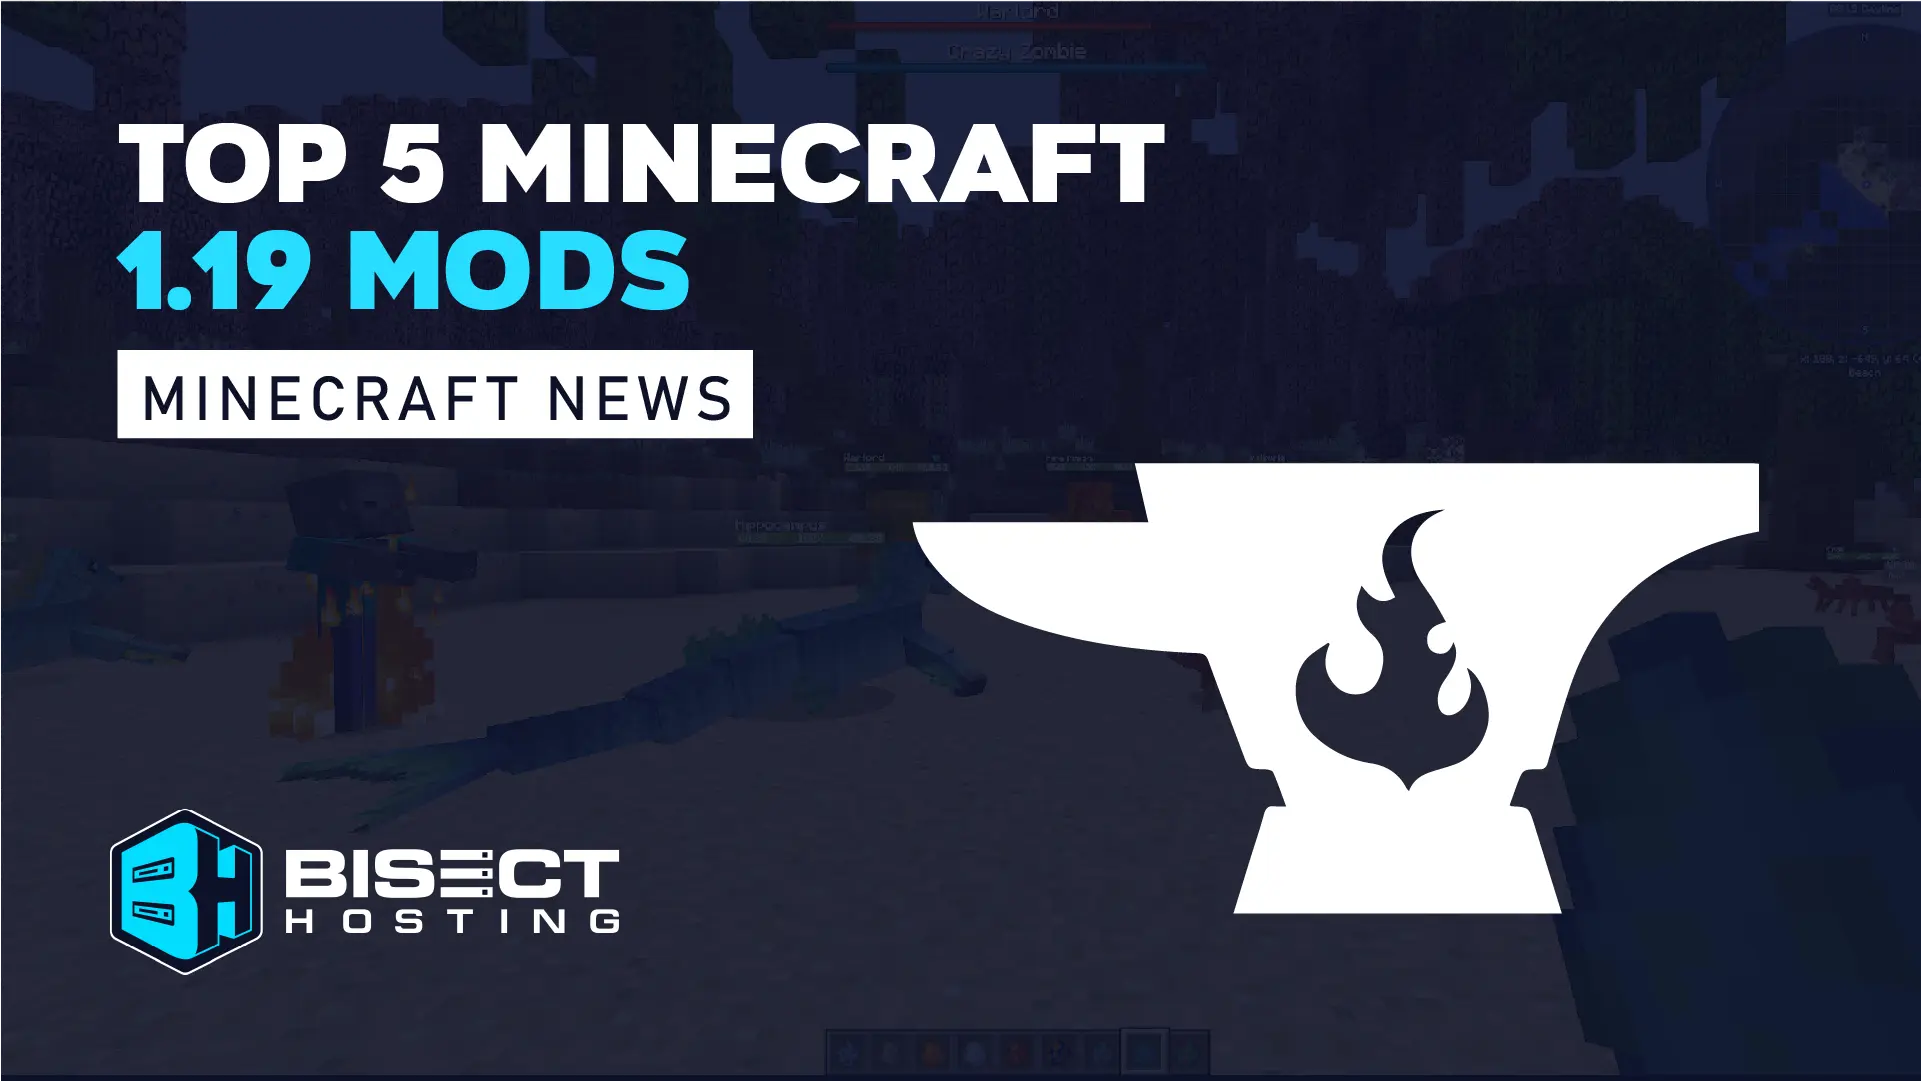 Top 5 Minecraft 1.19 Modpacks